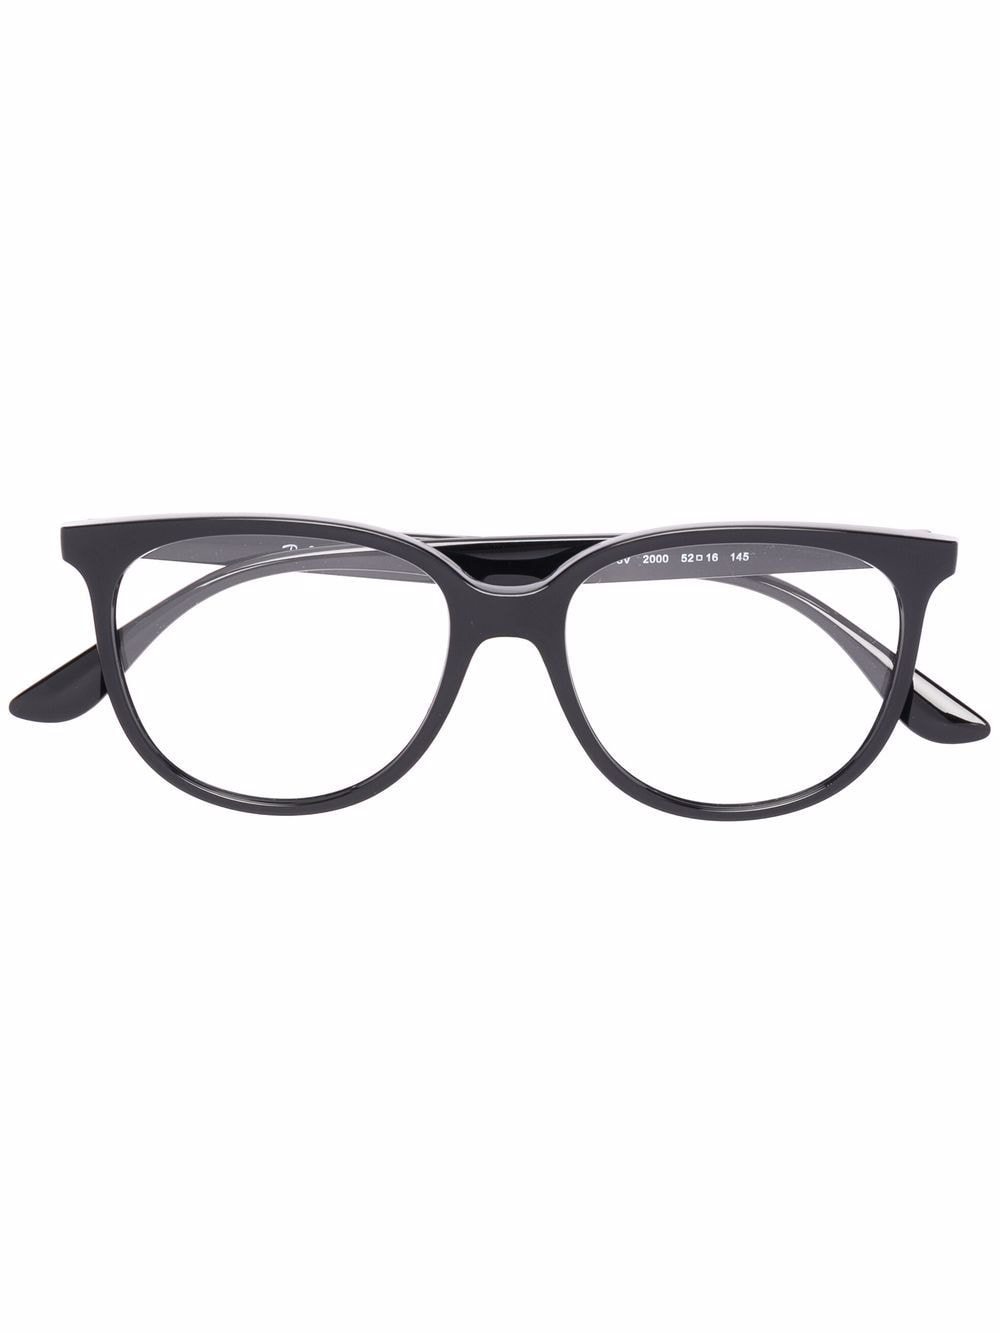 Ray-Ban RB4378 square-frame glasses - Black von Ray-Ban